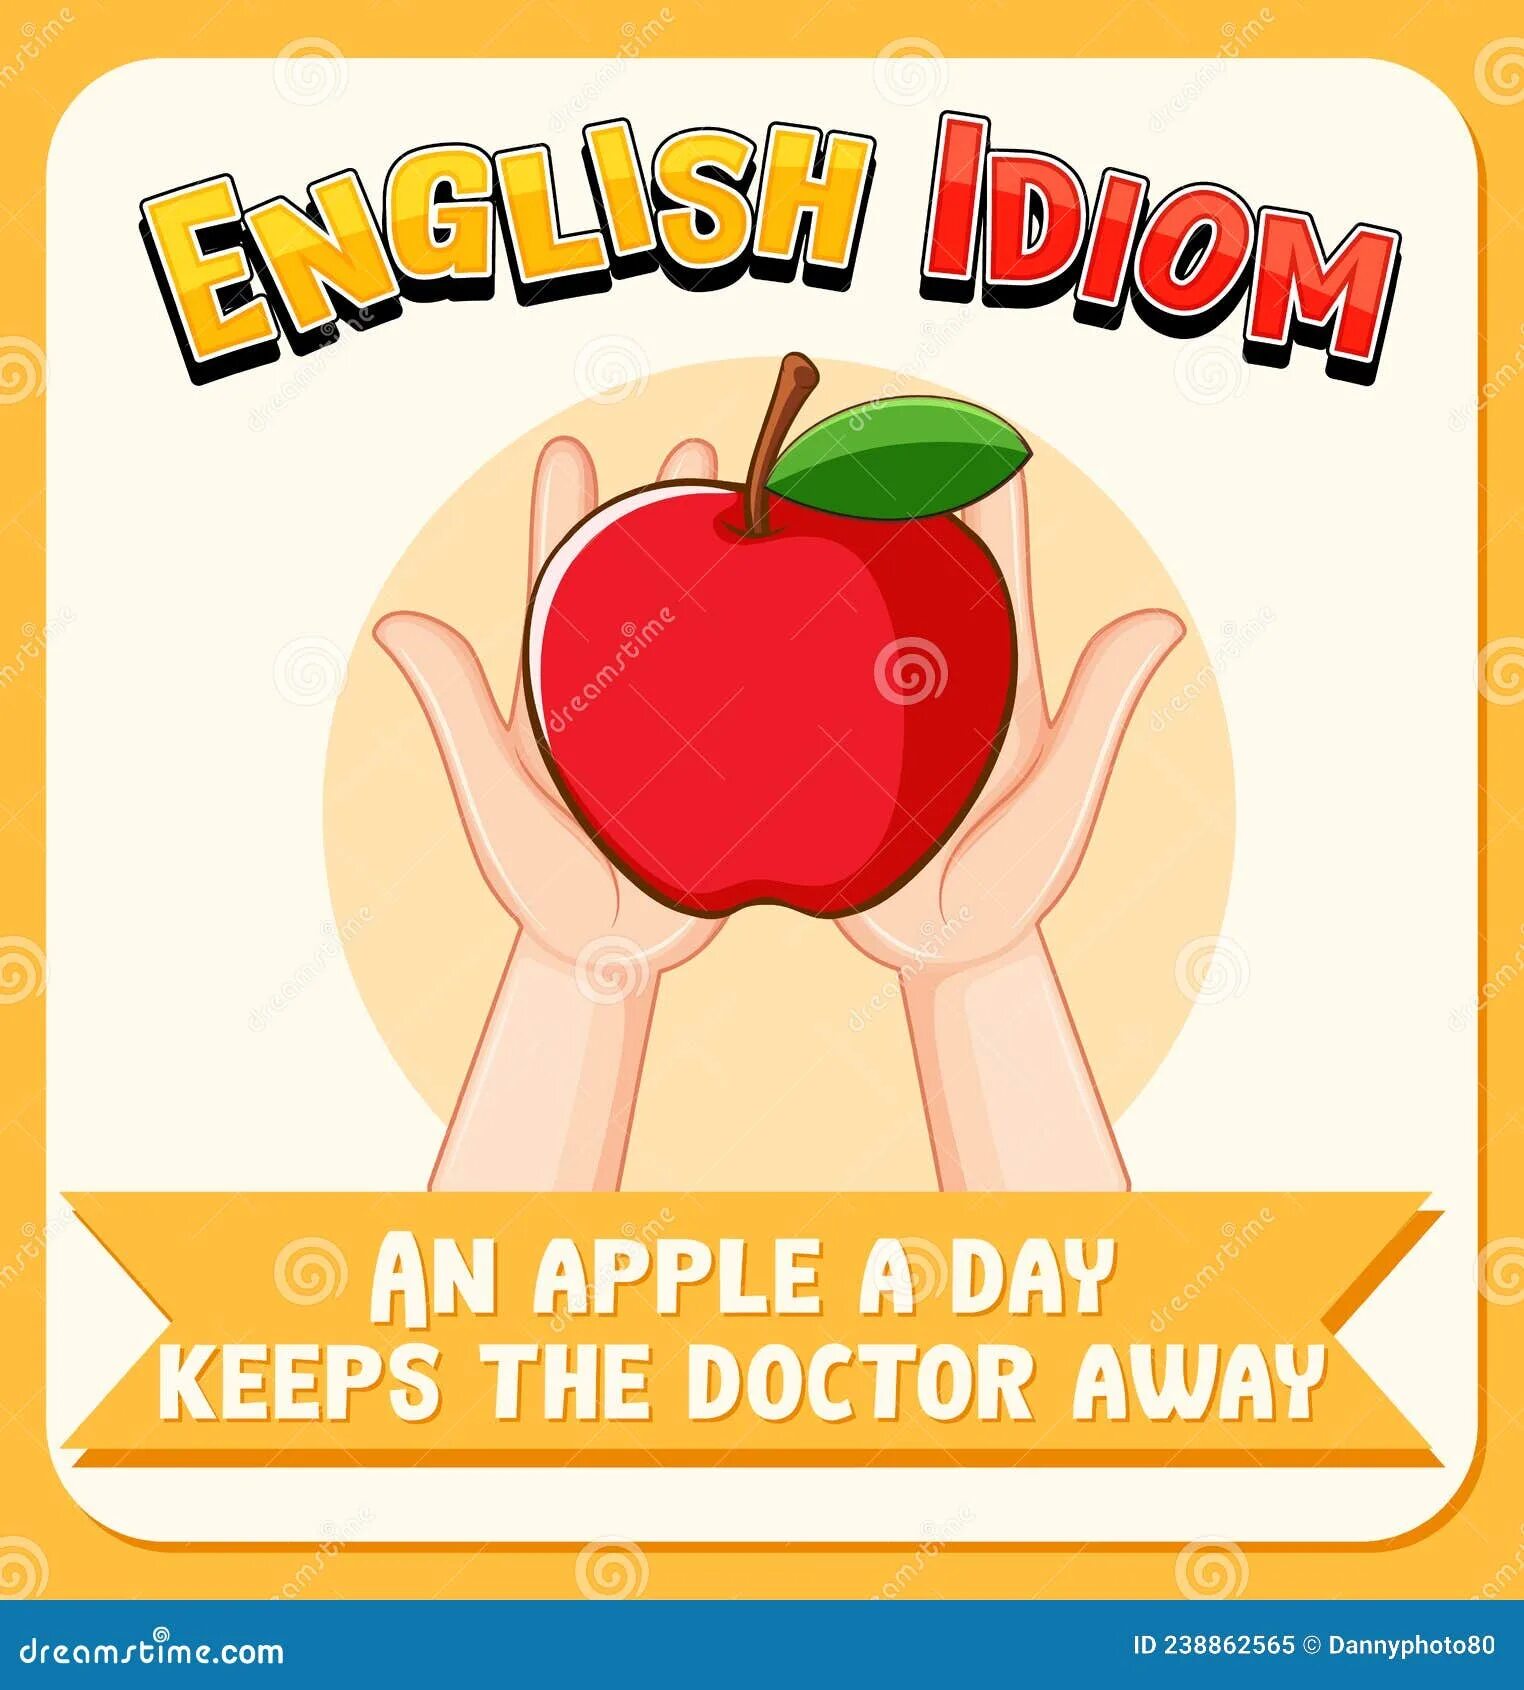 An apple a day keeps the away. An Apple a Day keeps the Doctor away. An Apple a Day keeps the Doctor away иллюстрация. An Apple a Day keeps the Doctor away идиома. Idioms an Apple a Day keeps the Doctor away.